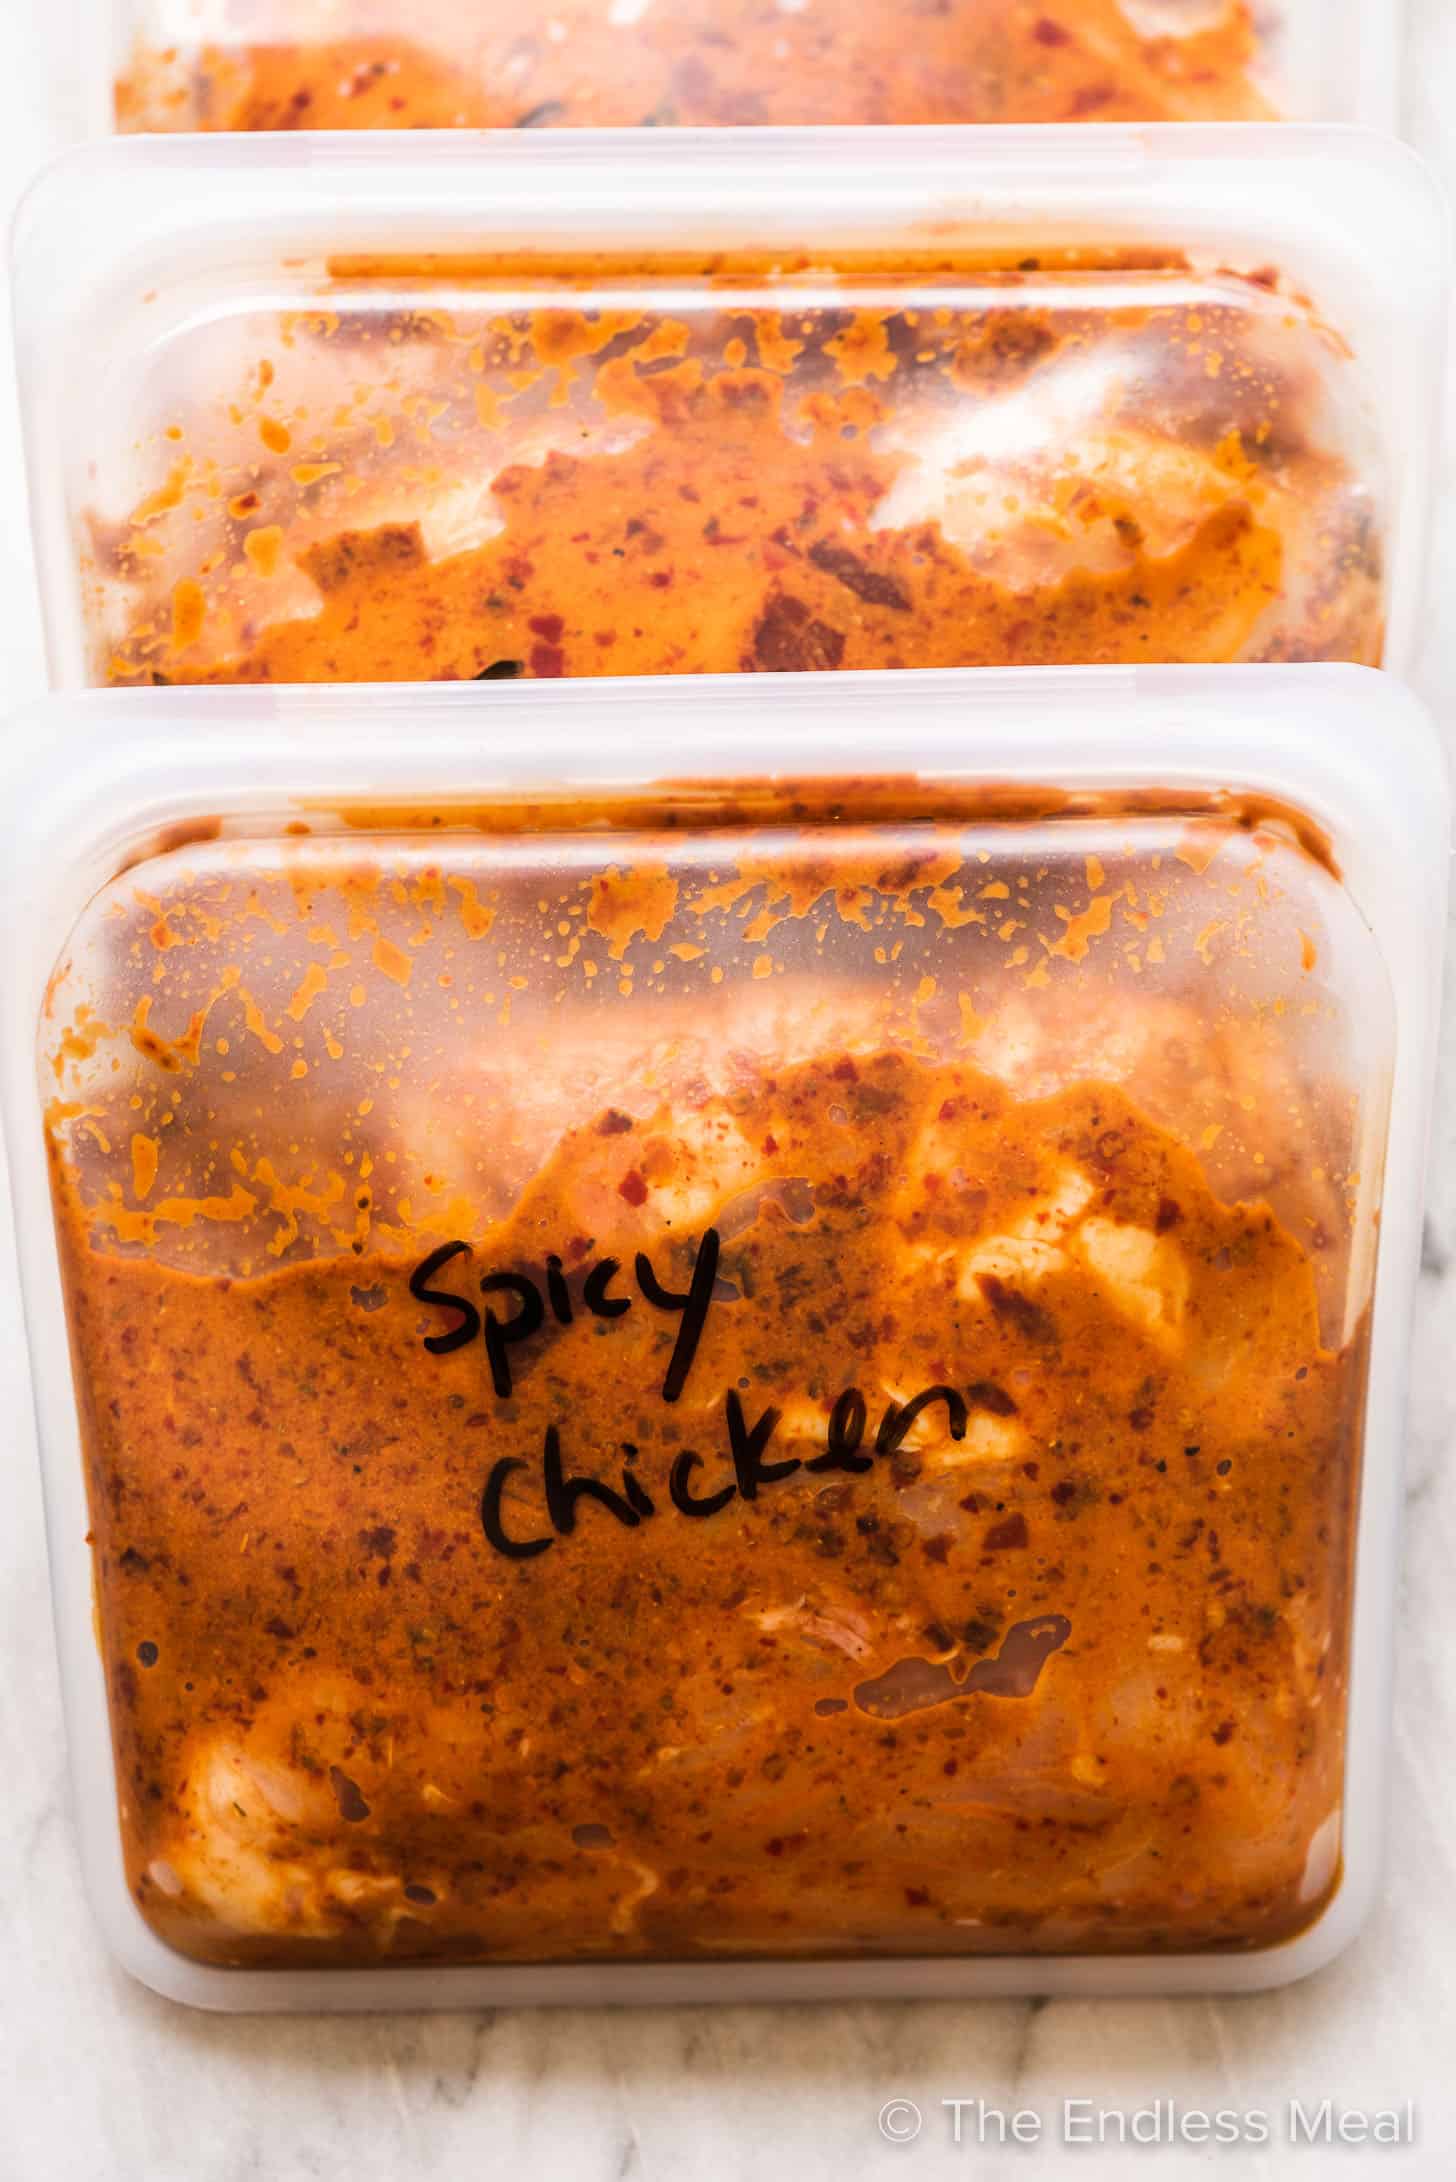 Spicy chicken marinating in freezer bags.